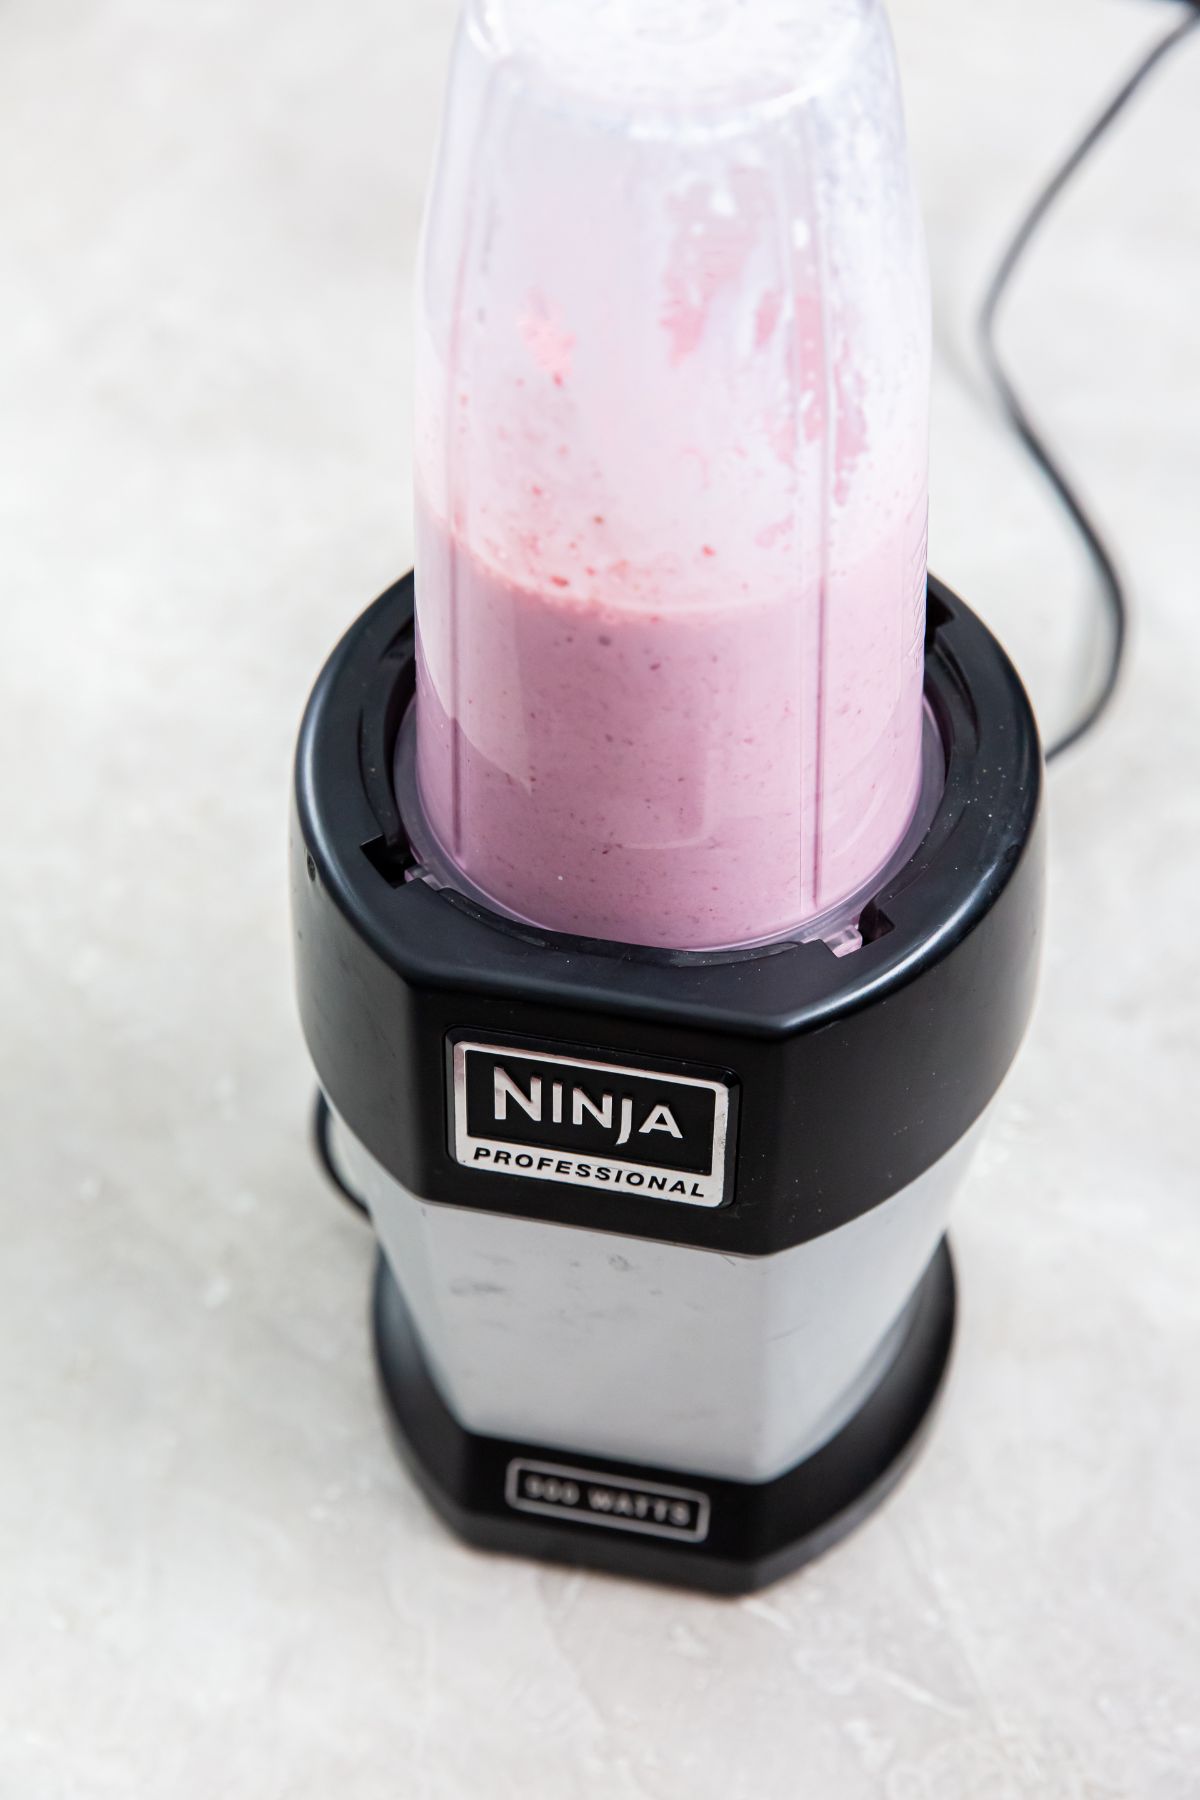 ninja blender with strawberry ice cream in it